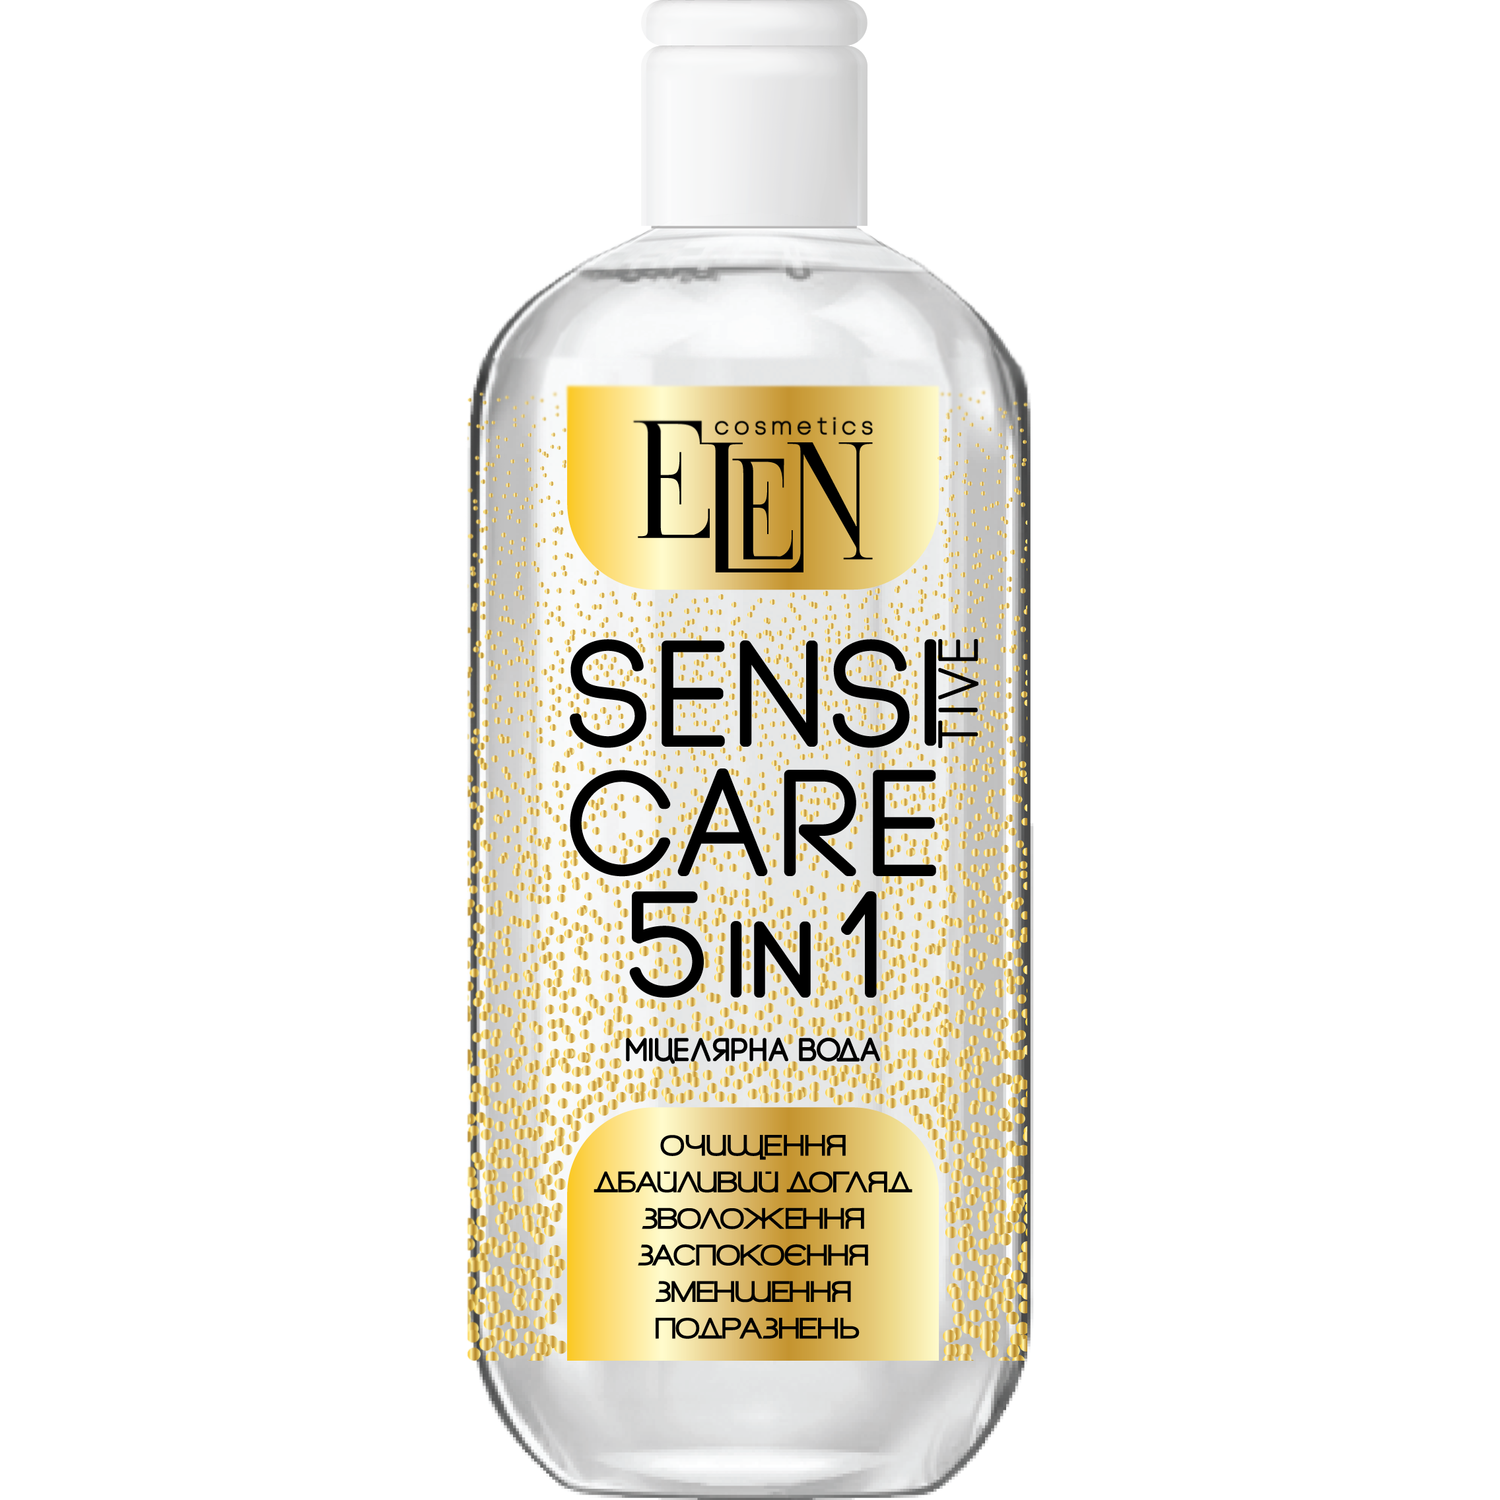 Мицеллярная вода Elen Cosmetics Sensitive Care 5в1, 500 мл - фото 1